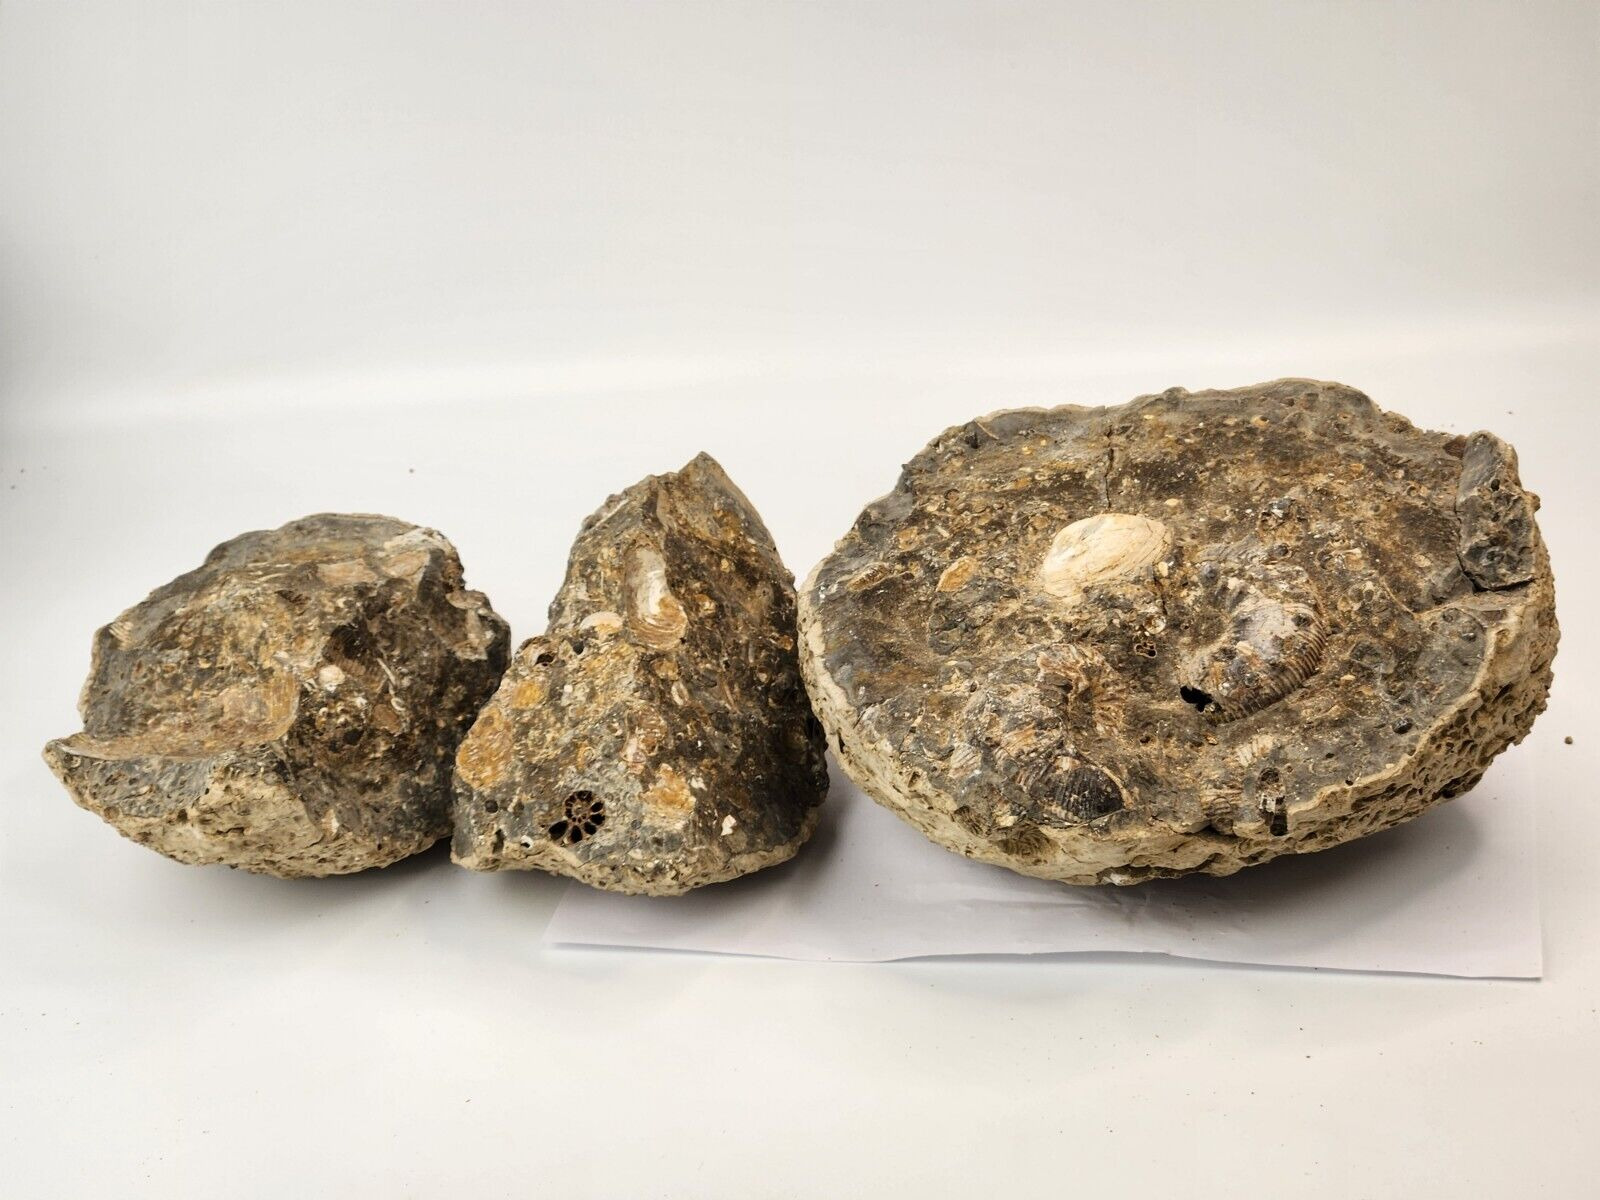 Large Invertebrate Nodule - Various Ammonite, Bivalve Fossils - Fox Hills Fm.